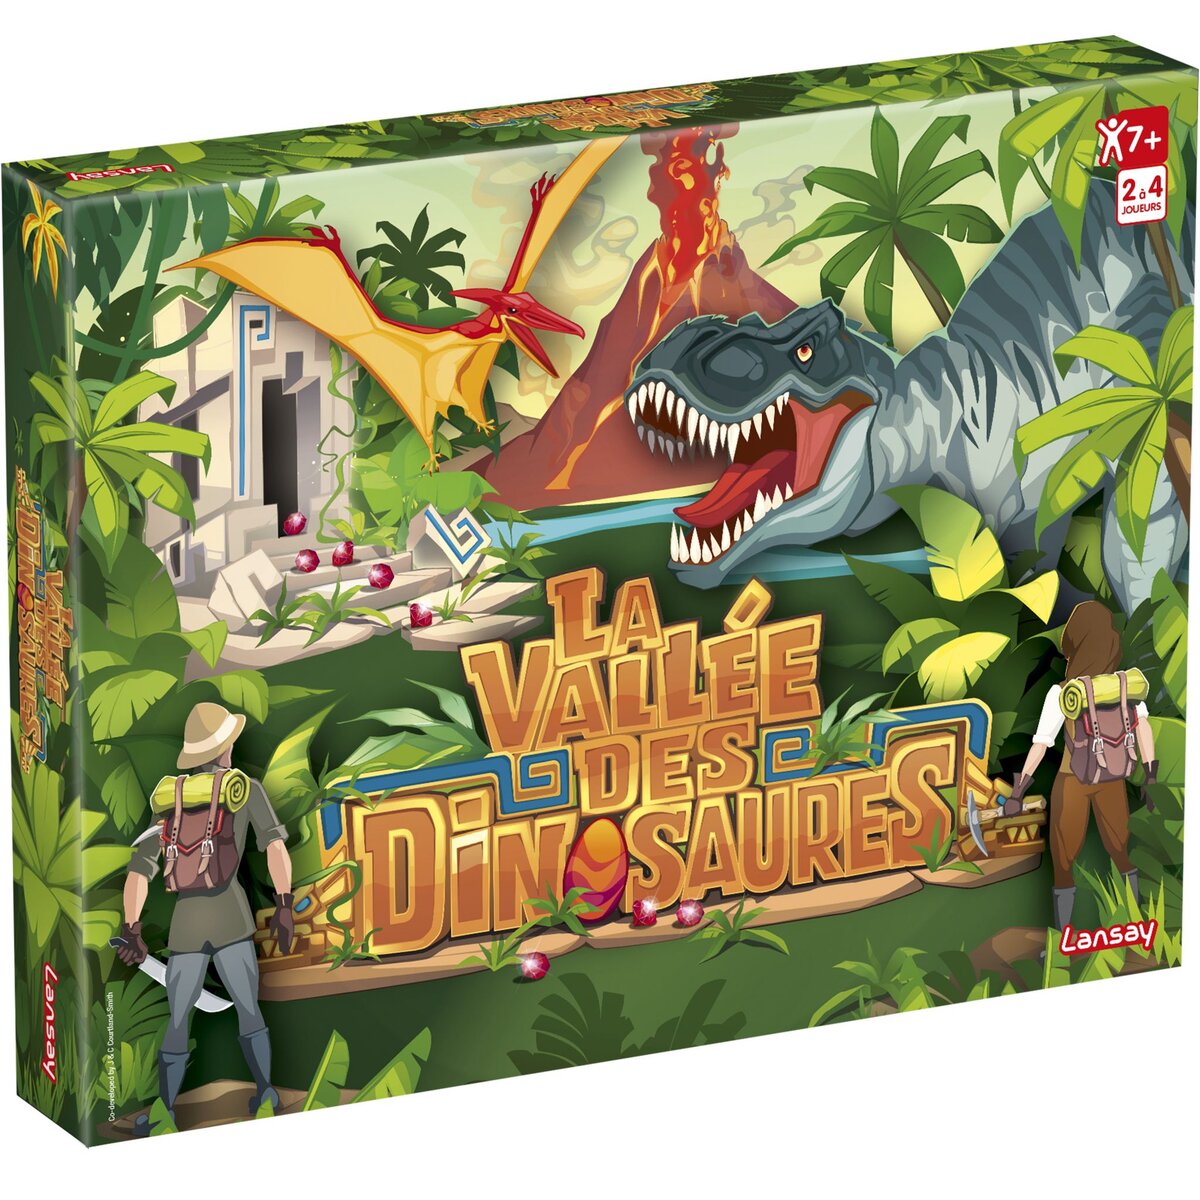 LANSAY Jeu La vallée des Dinosaures 